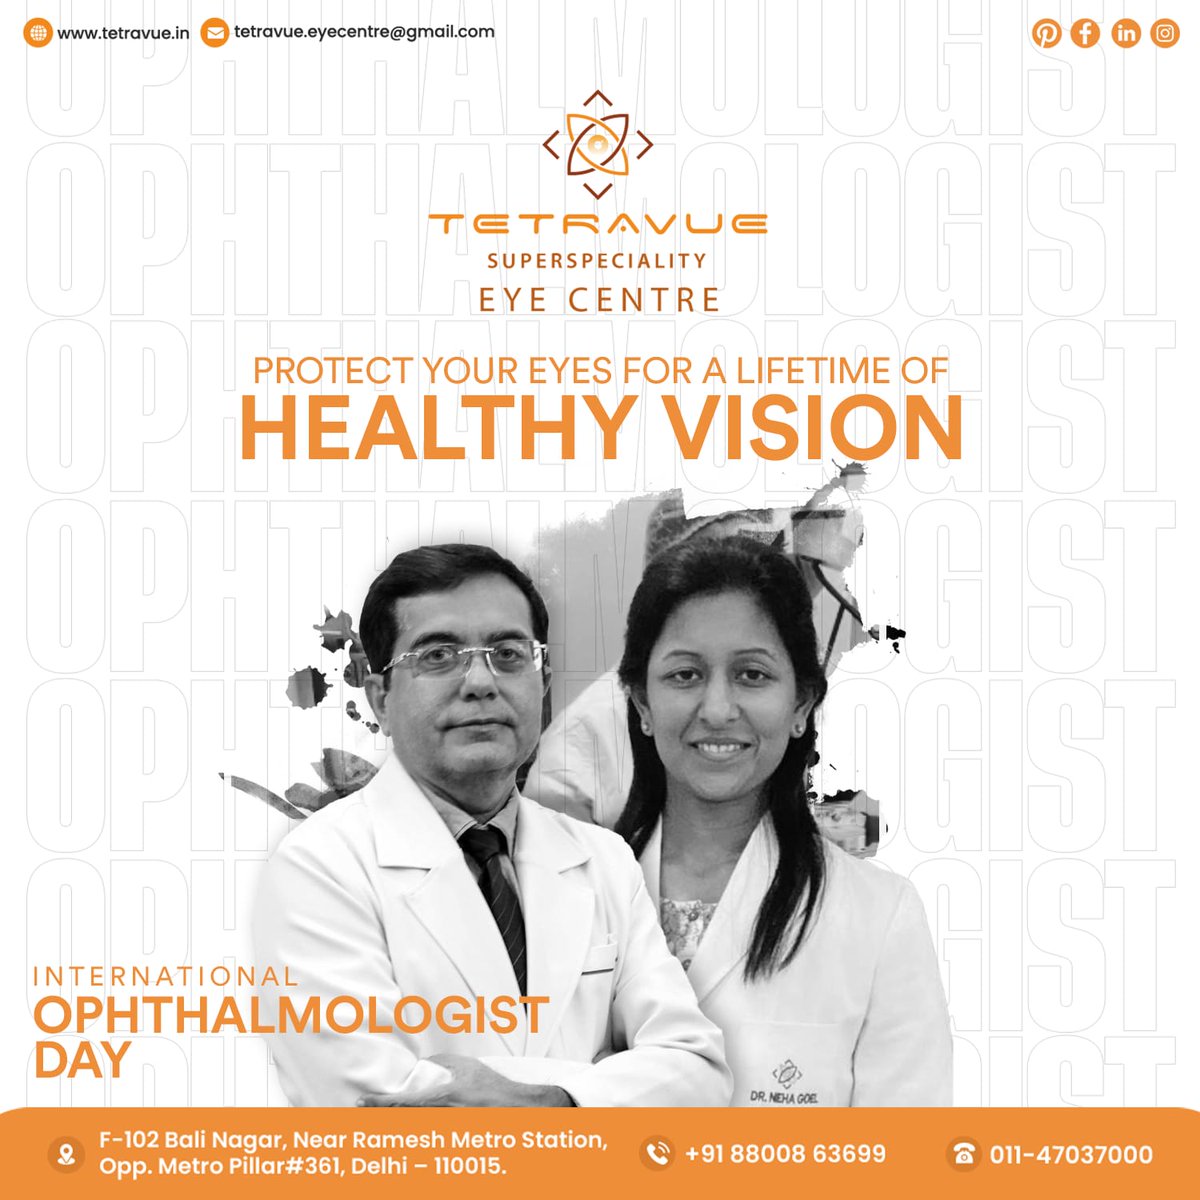 International Ophthalmologist Day 

#internationalophthalmolositday #specsremovaltreatment #glassesremoval #ophthalmology #eyedoctor #optometrist #optometry #cataract #eyehealth #visioncare #eyespecialist #visioncare #besteyecenter #delhi #drnehagoel #drmukeshtaneja